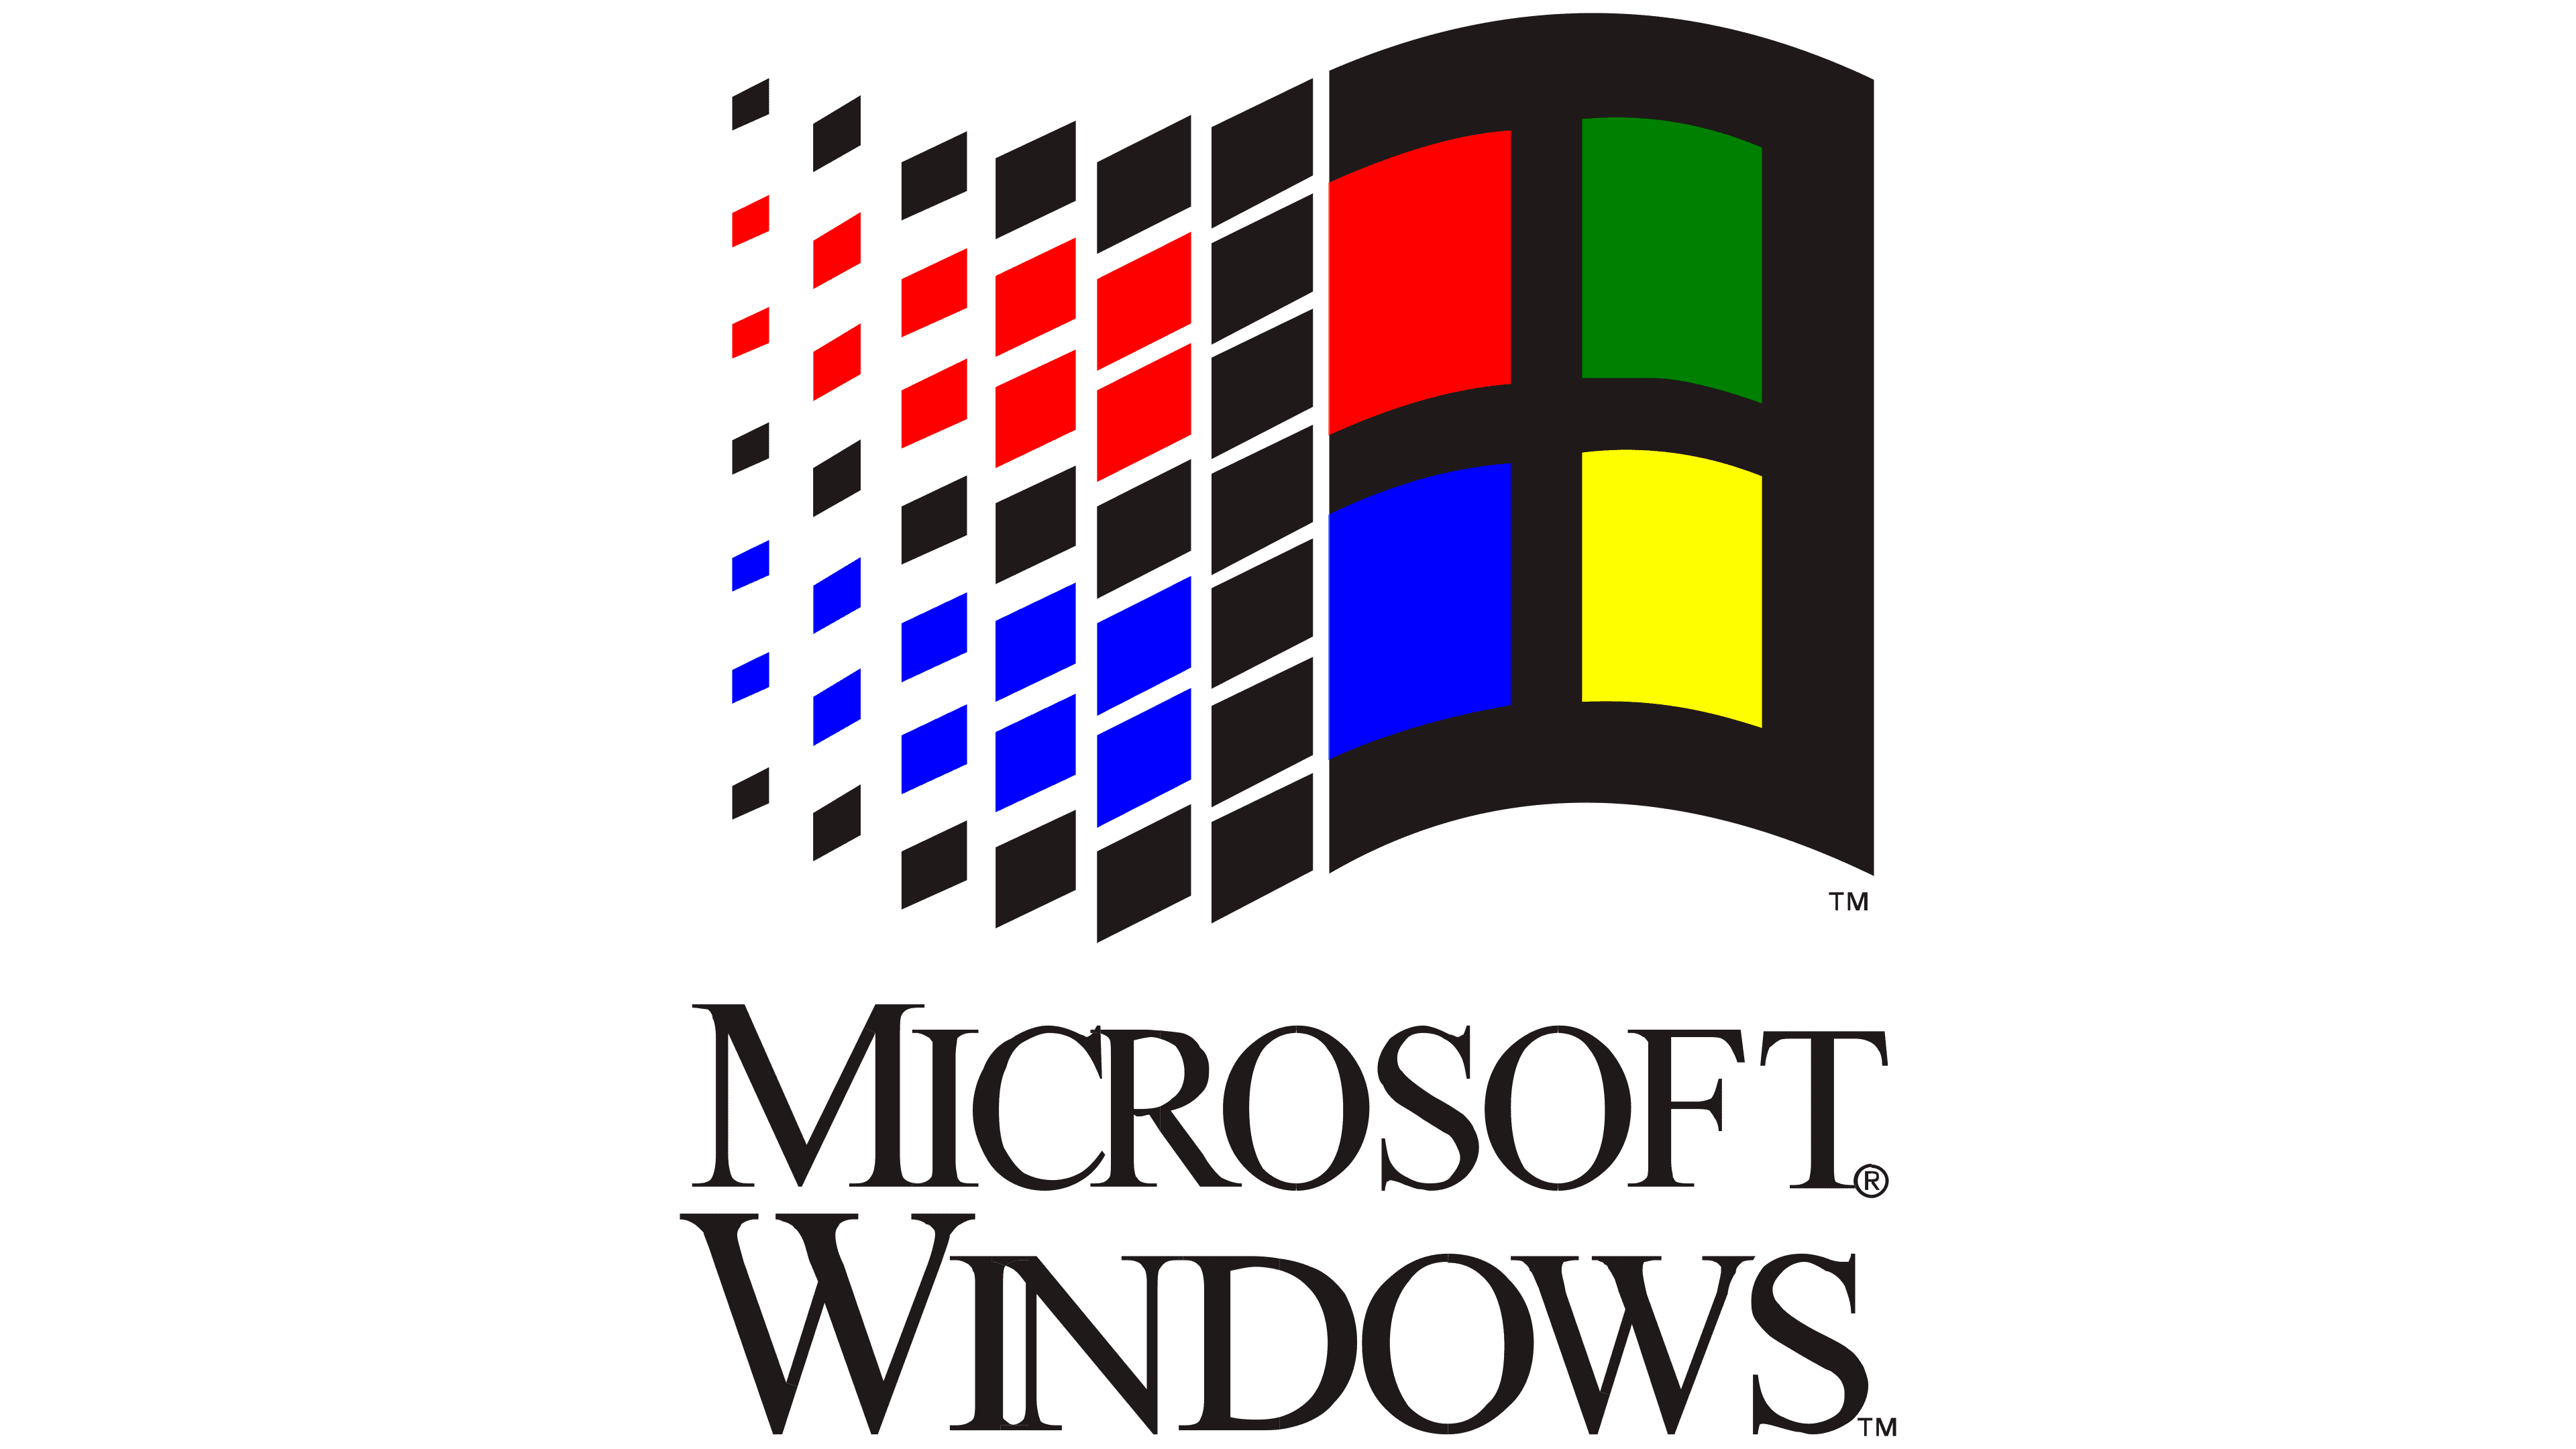 Window nt. Windows 95 логотип. Windows 3.1x. Логотип Microsoft Windows. Первый логотип виндовс.